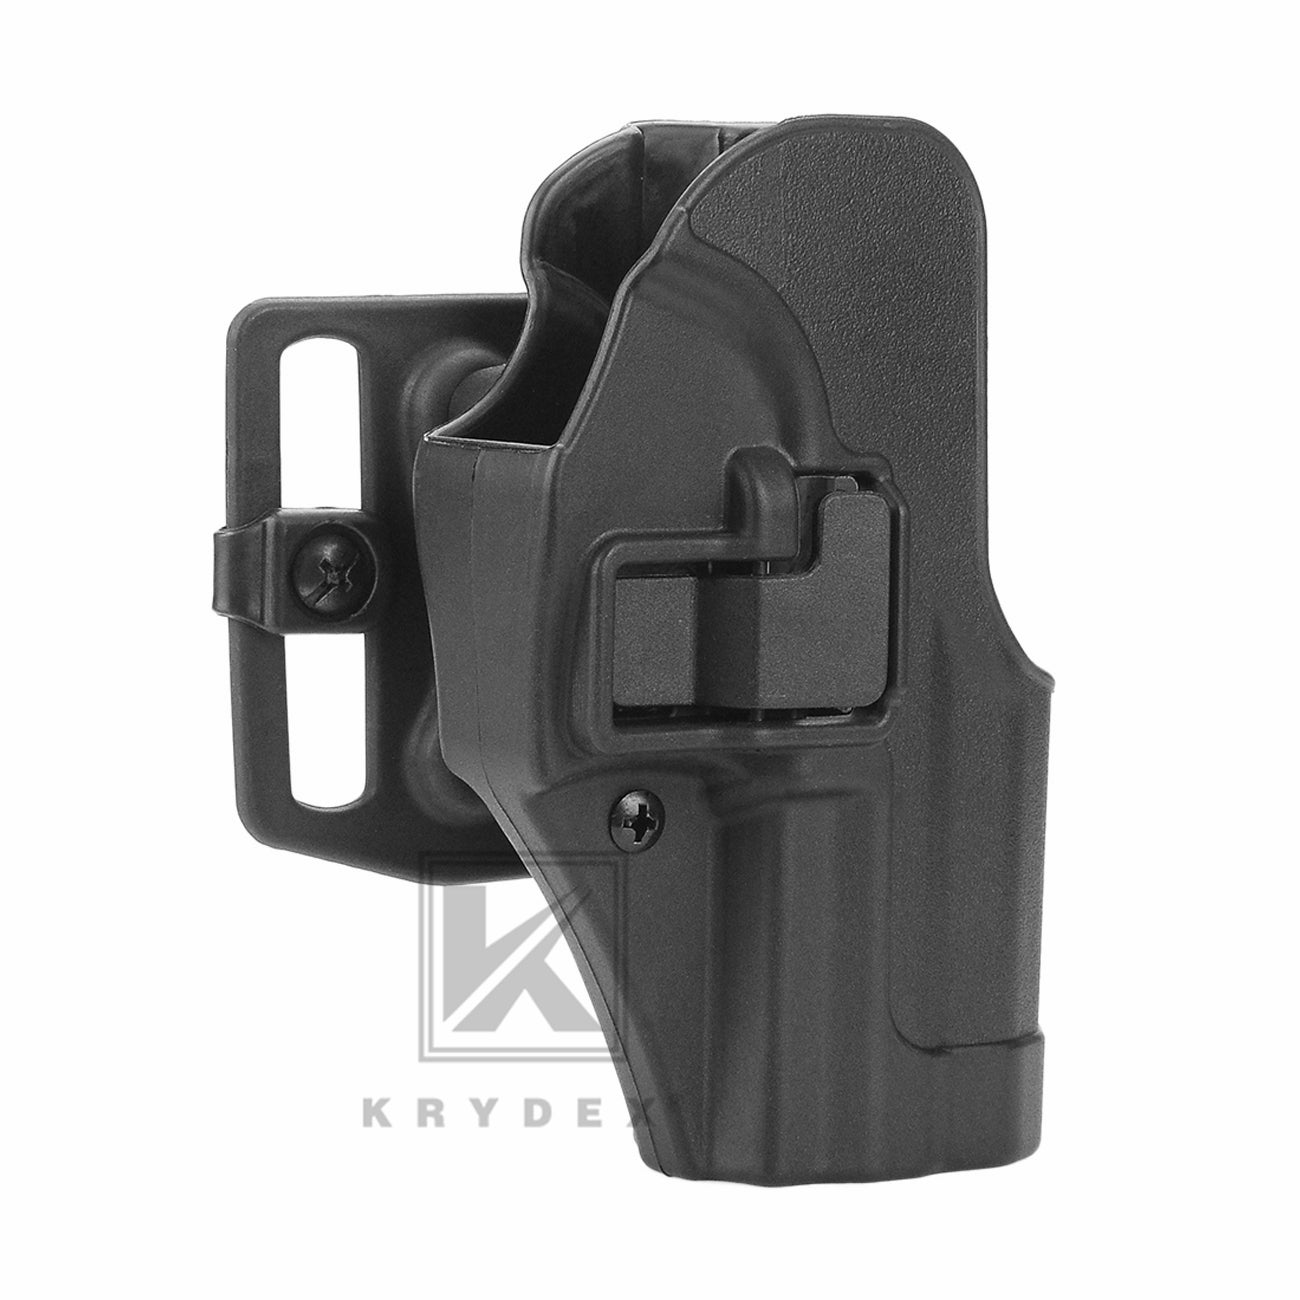 Tactical Concealment Quick Draw Right Hand Belt Pistol Gun Holster for Taurus PT111 G2